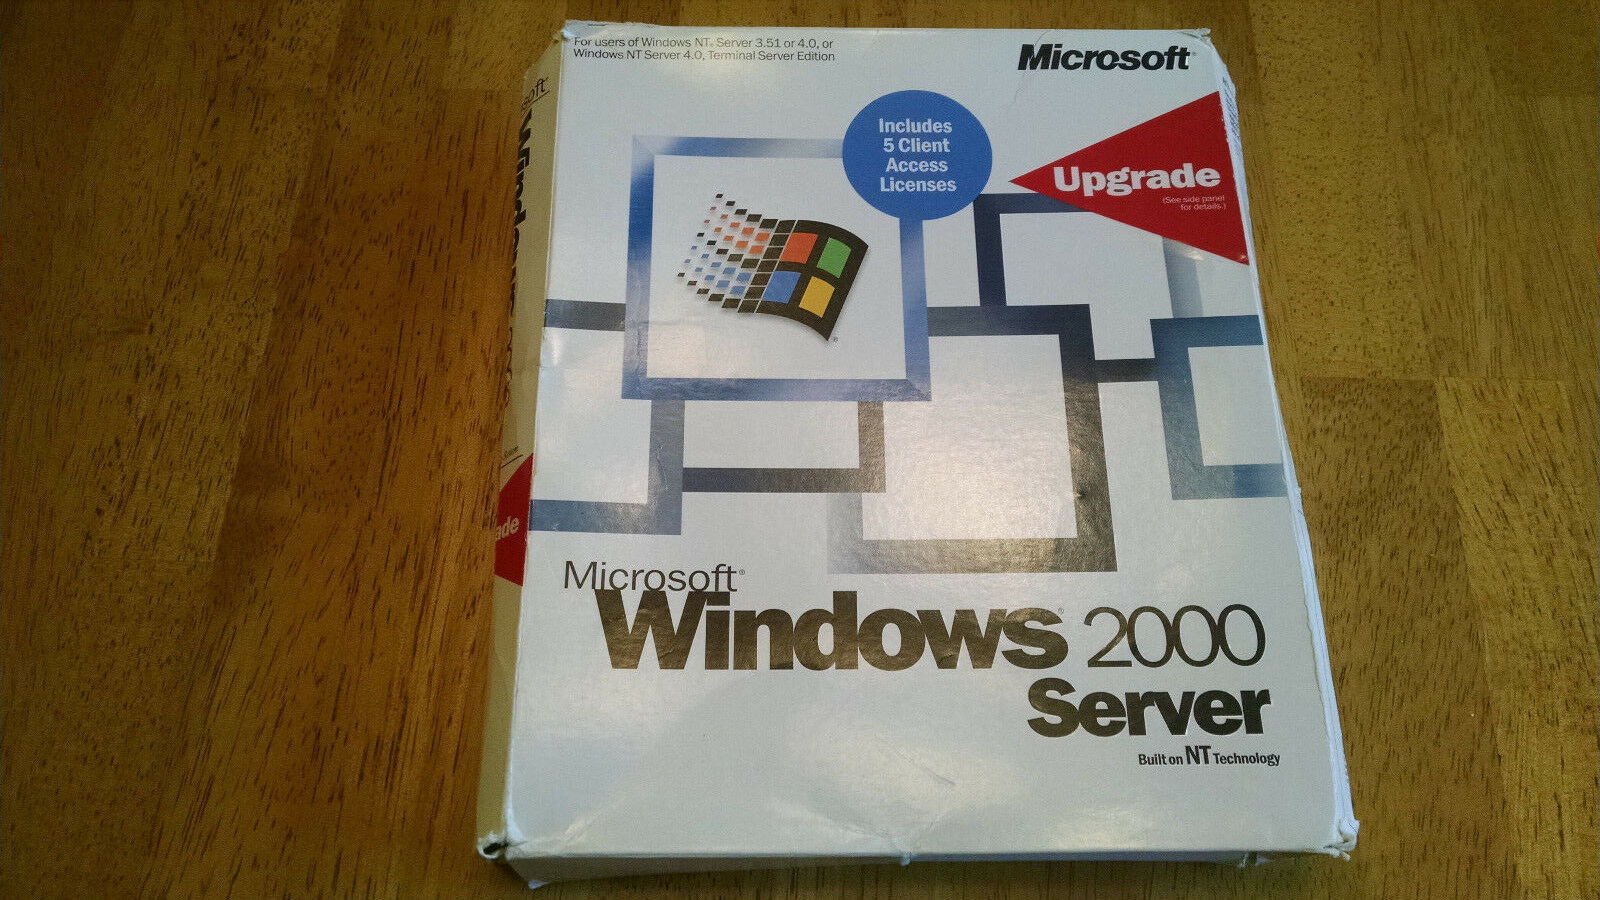 Windows 2000 Server Logo - HD Wallpaper 